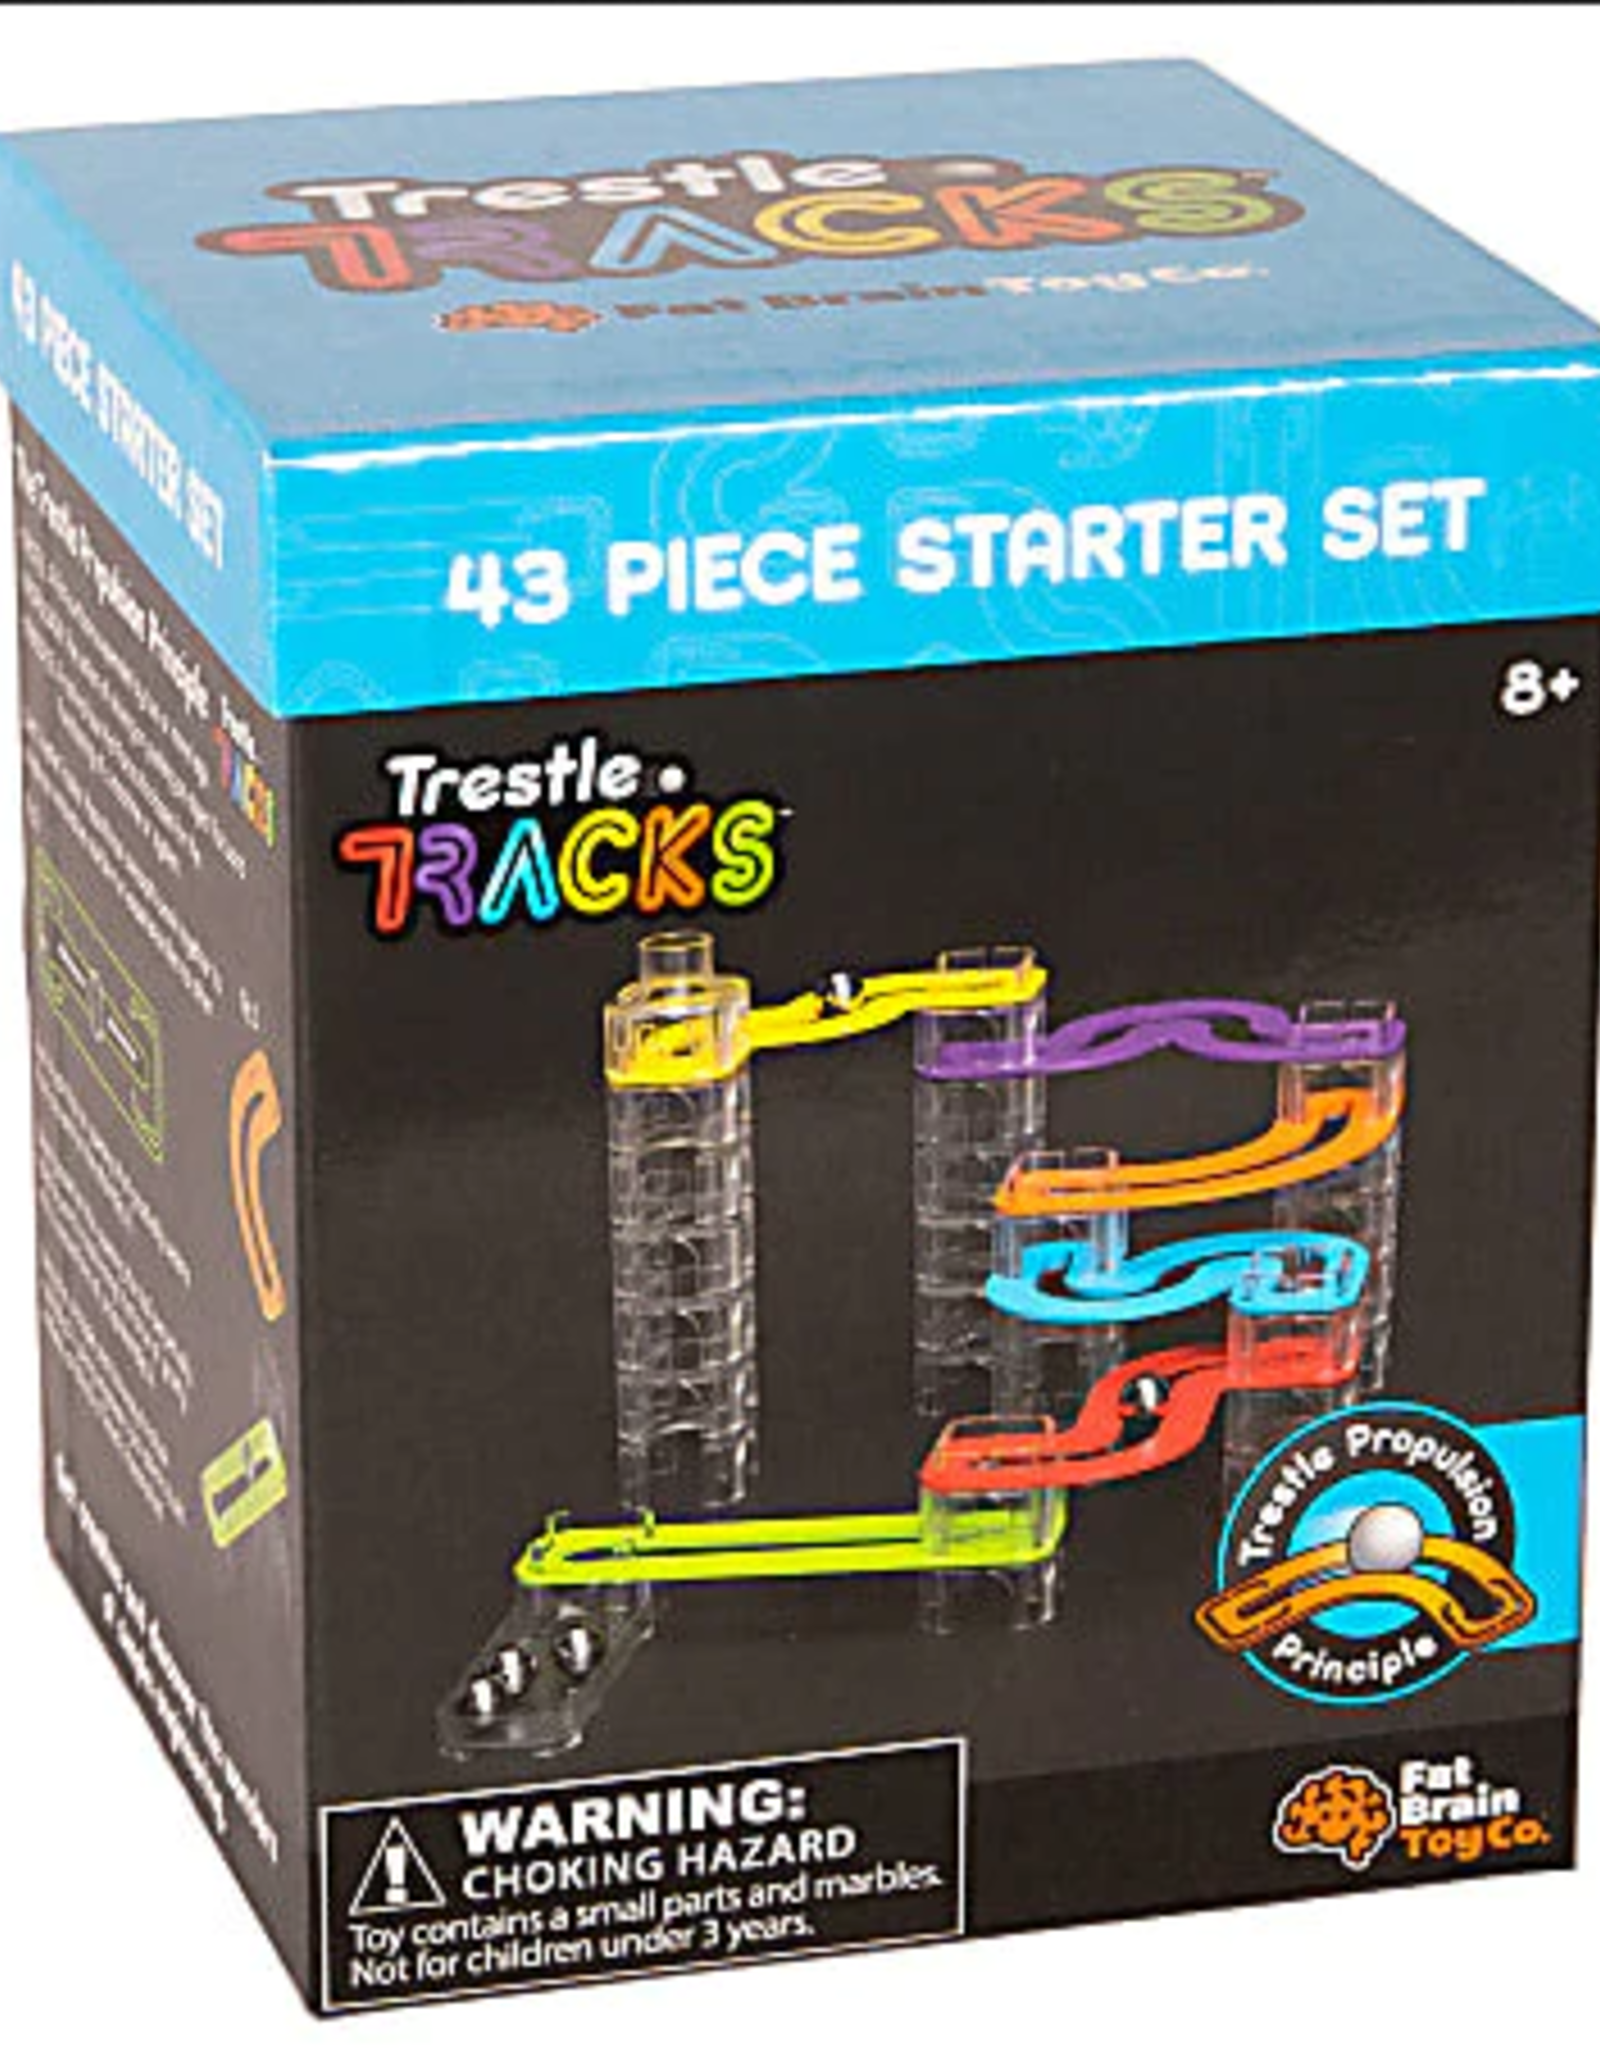 Fat Brain Toy Co Trestle Track Starter Set: 43pc